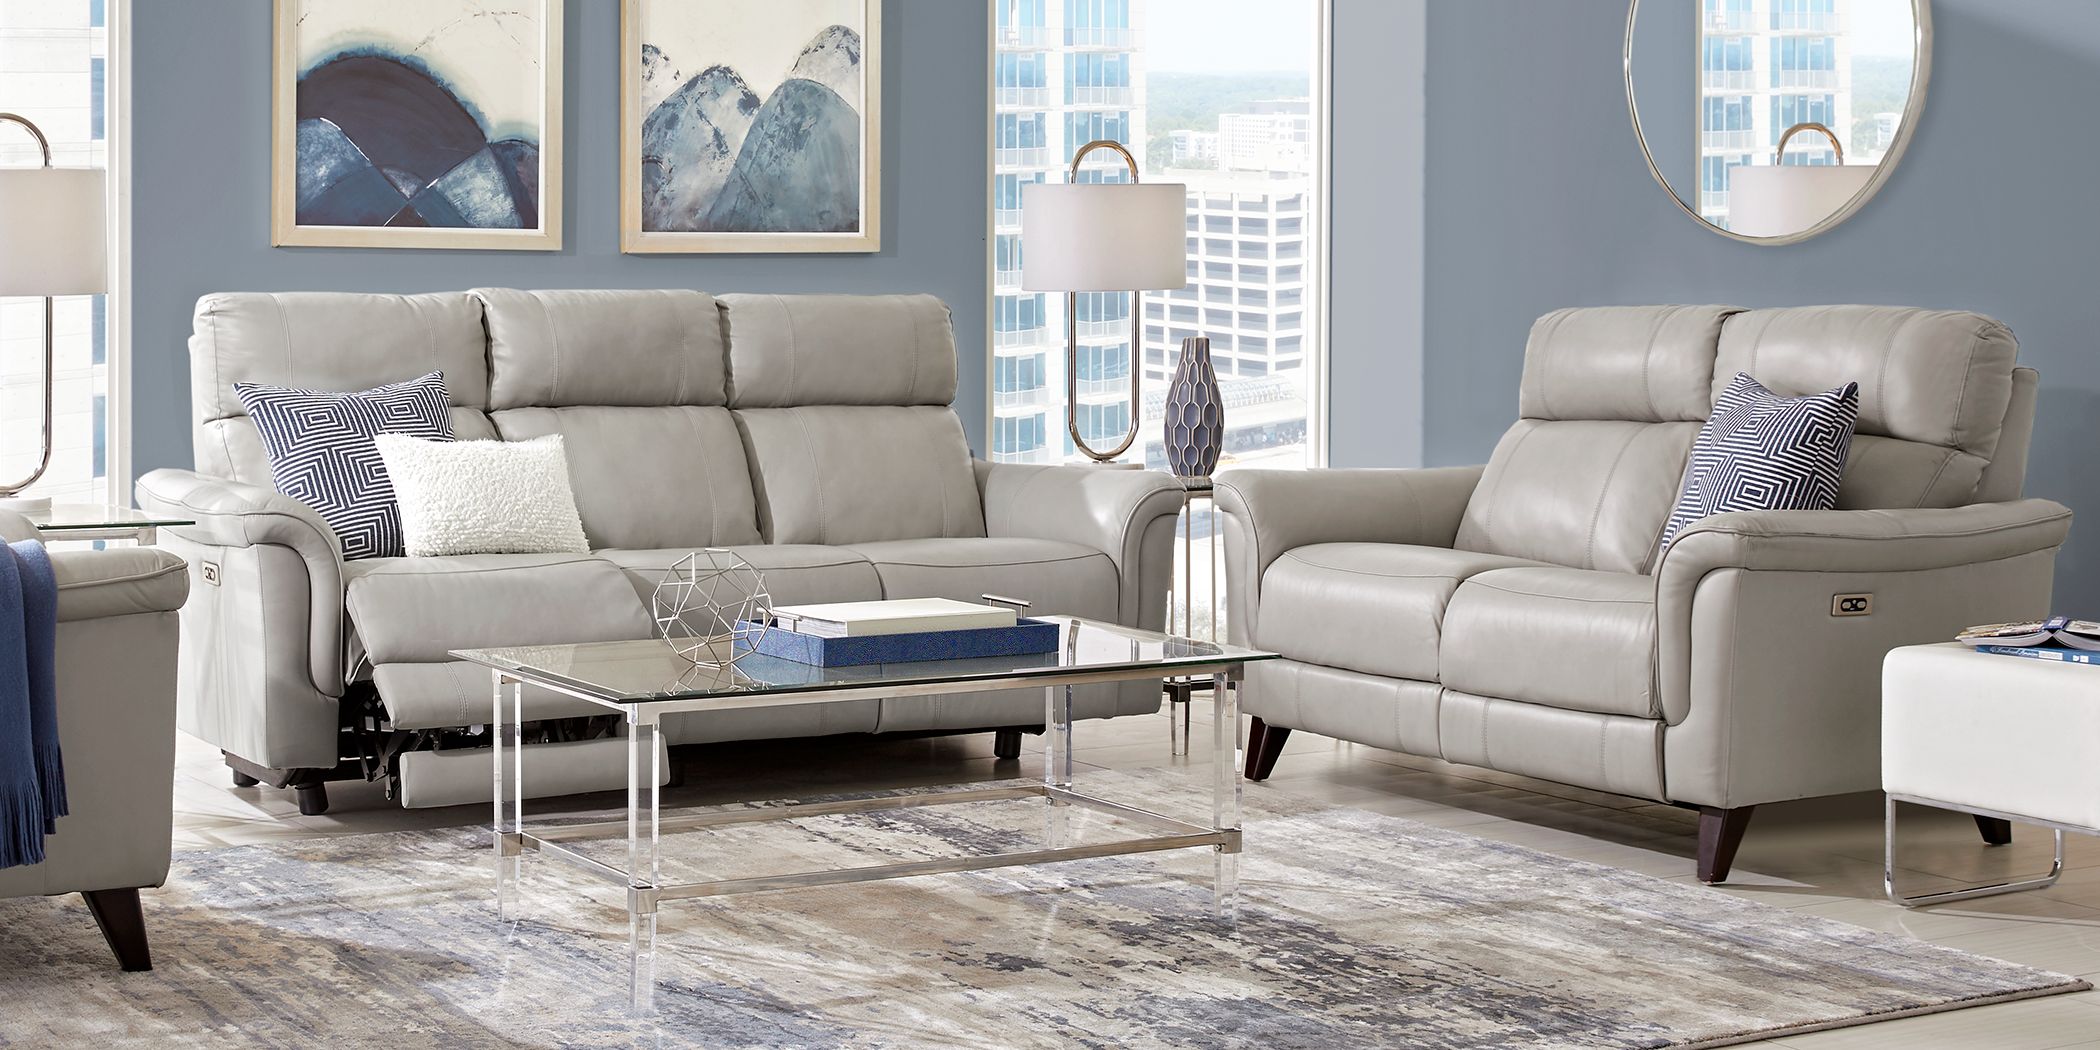 Cindy Crawford Home Living Room Furniture Sets